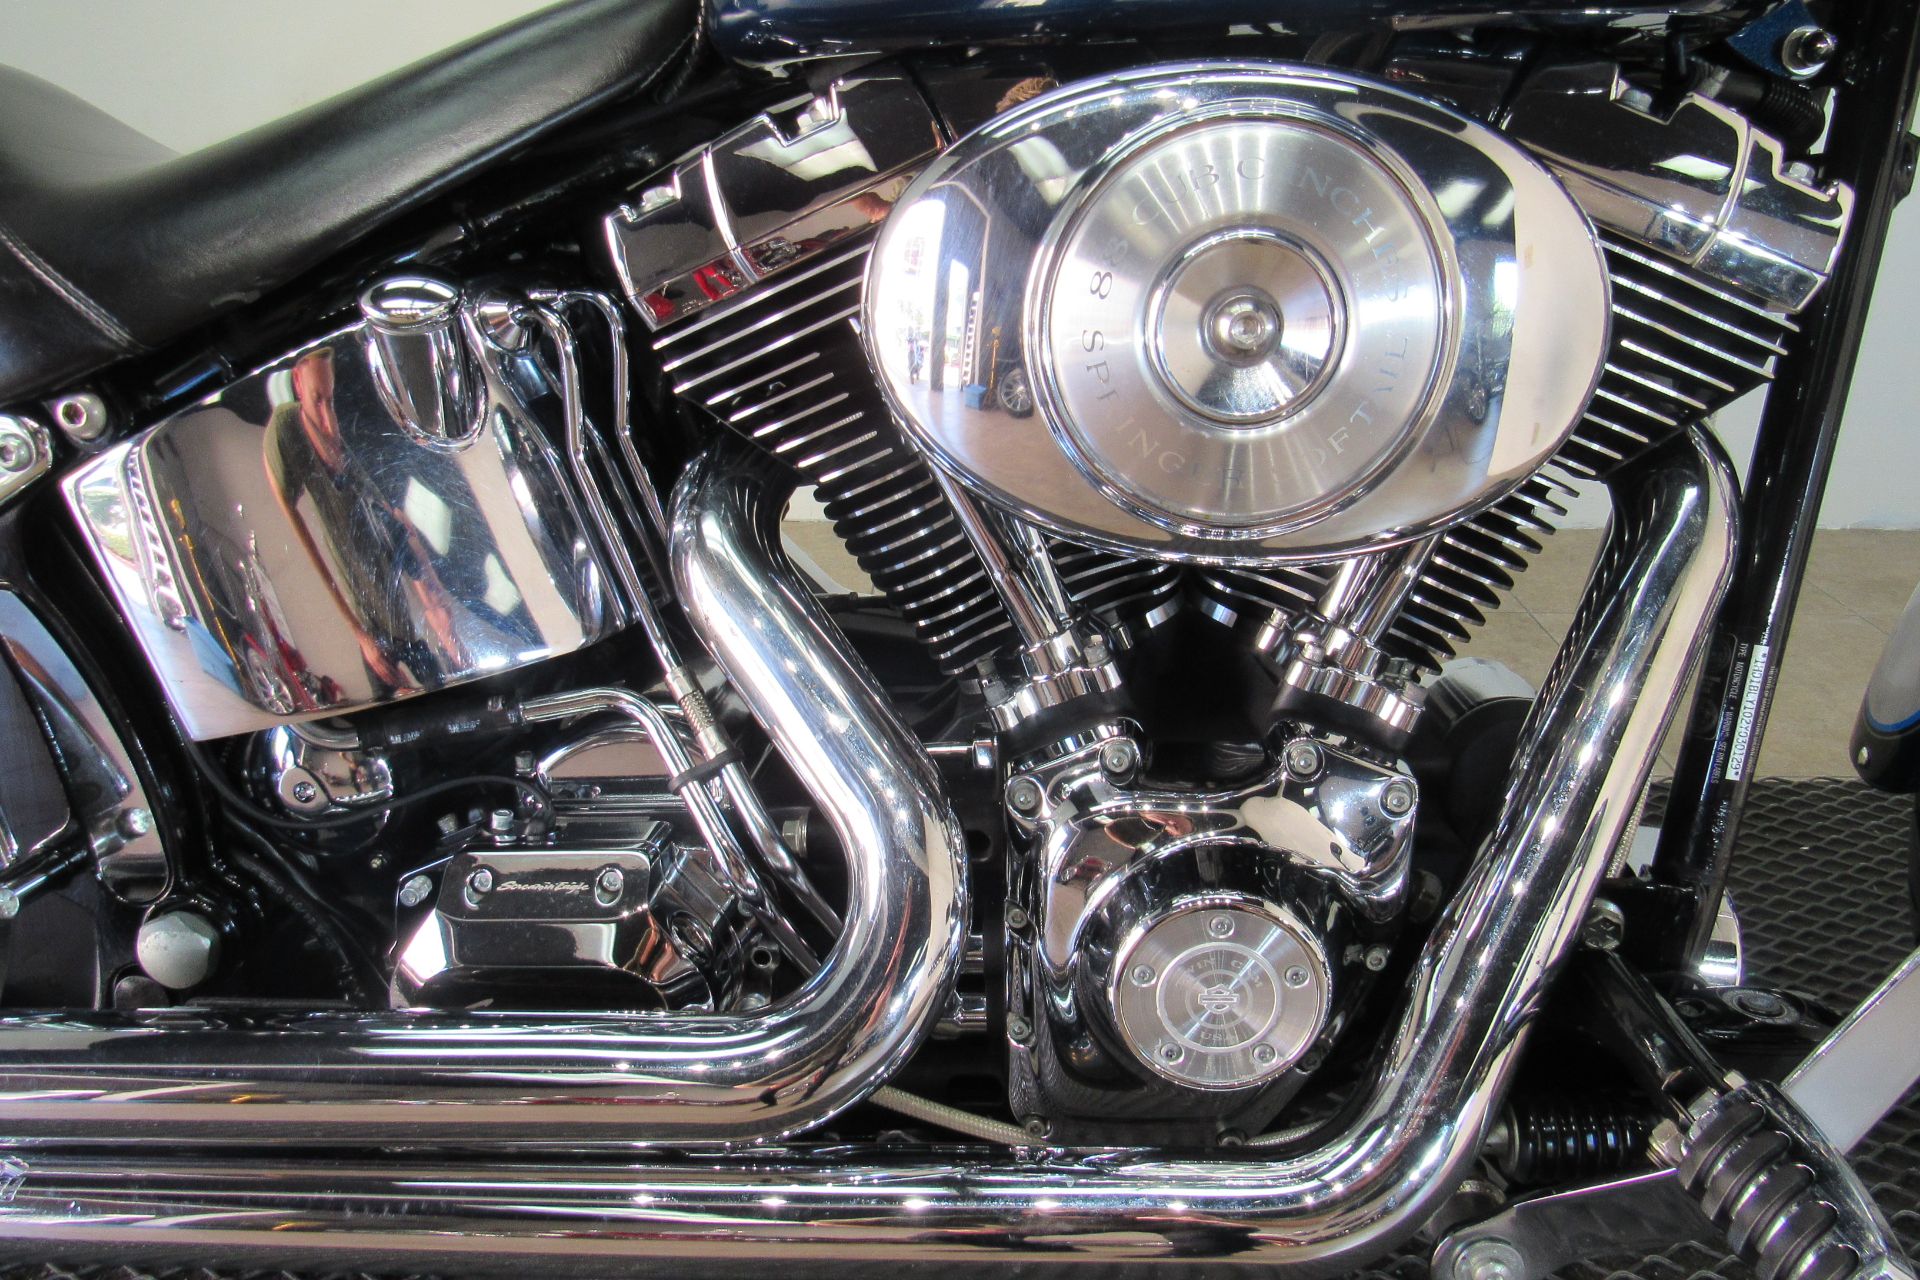 2002 Harley-Davidson FXSTS/FXSTSI Springer®  Softail® in Temecula, California - Photo 11